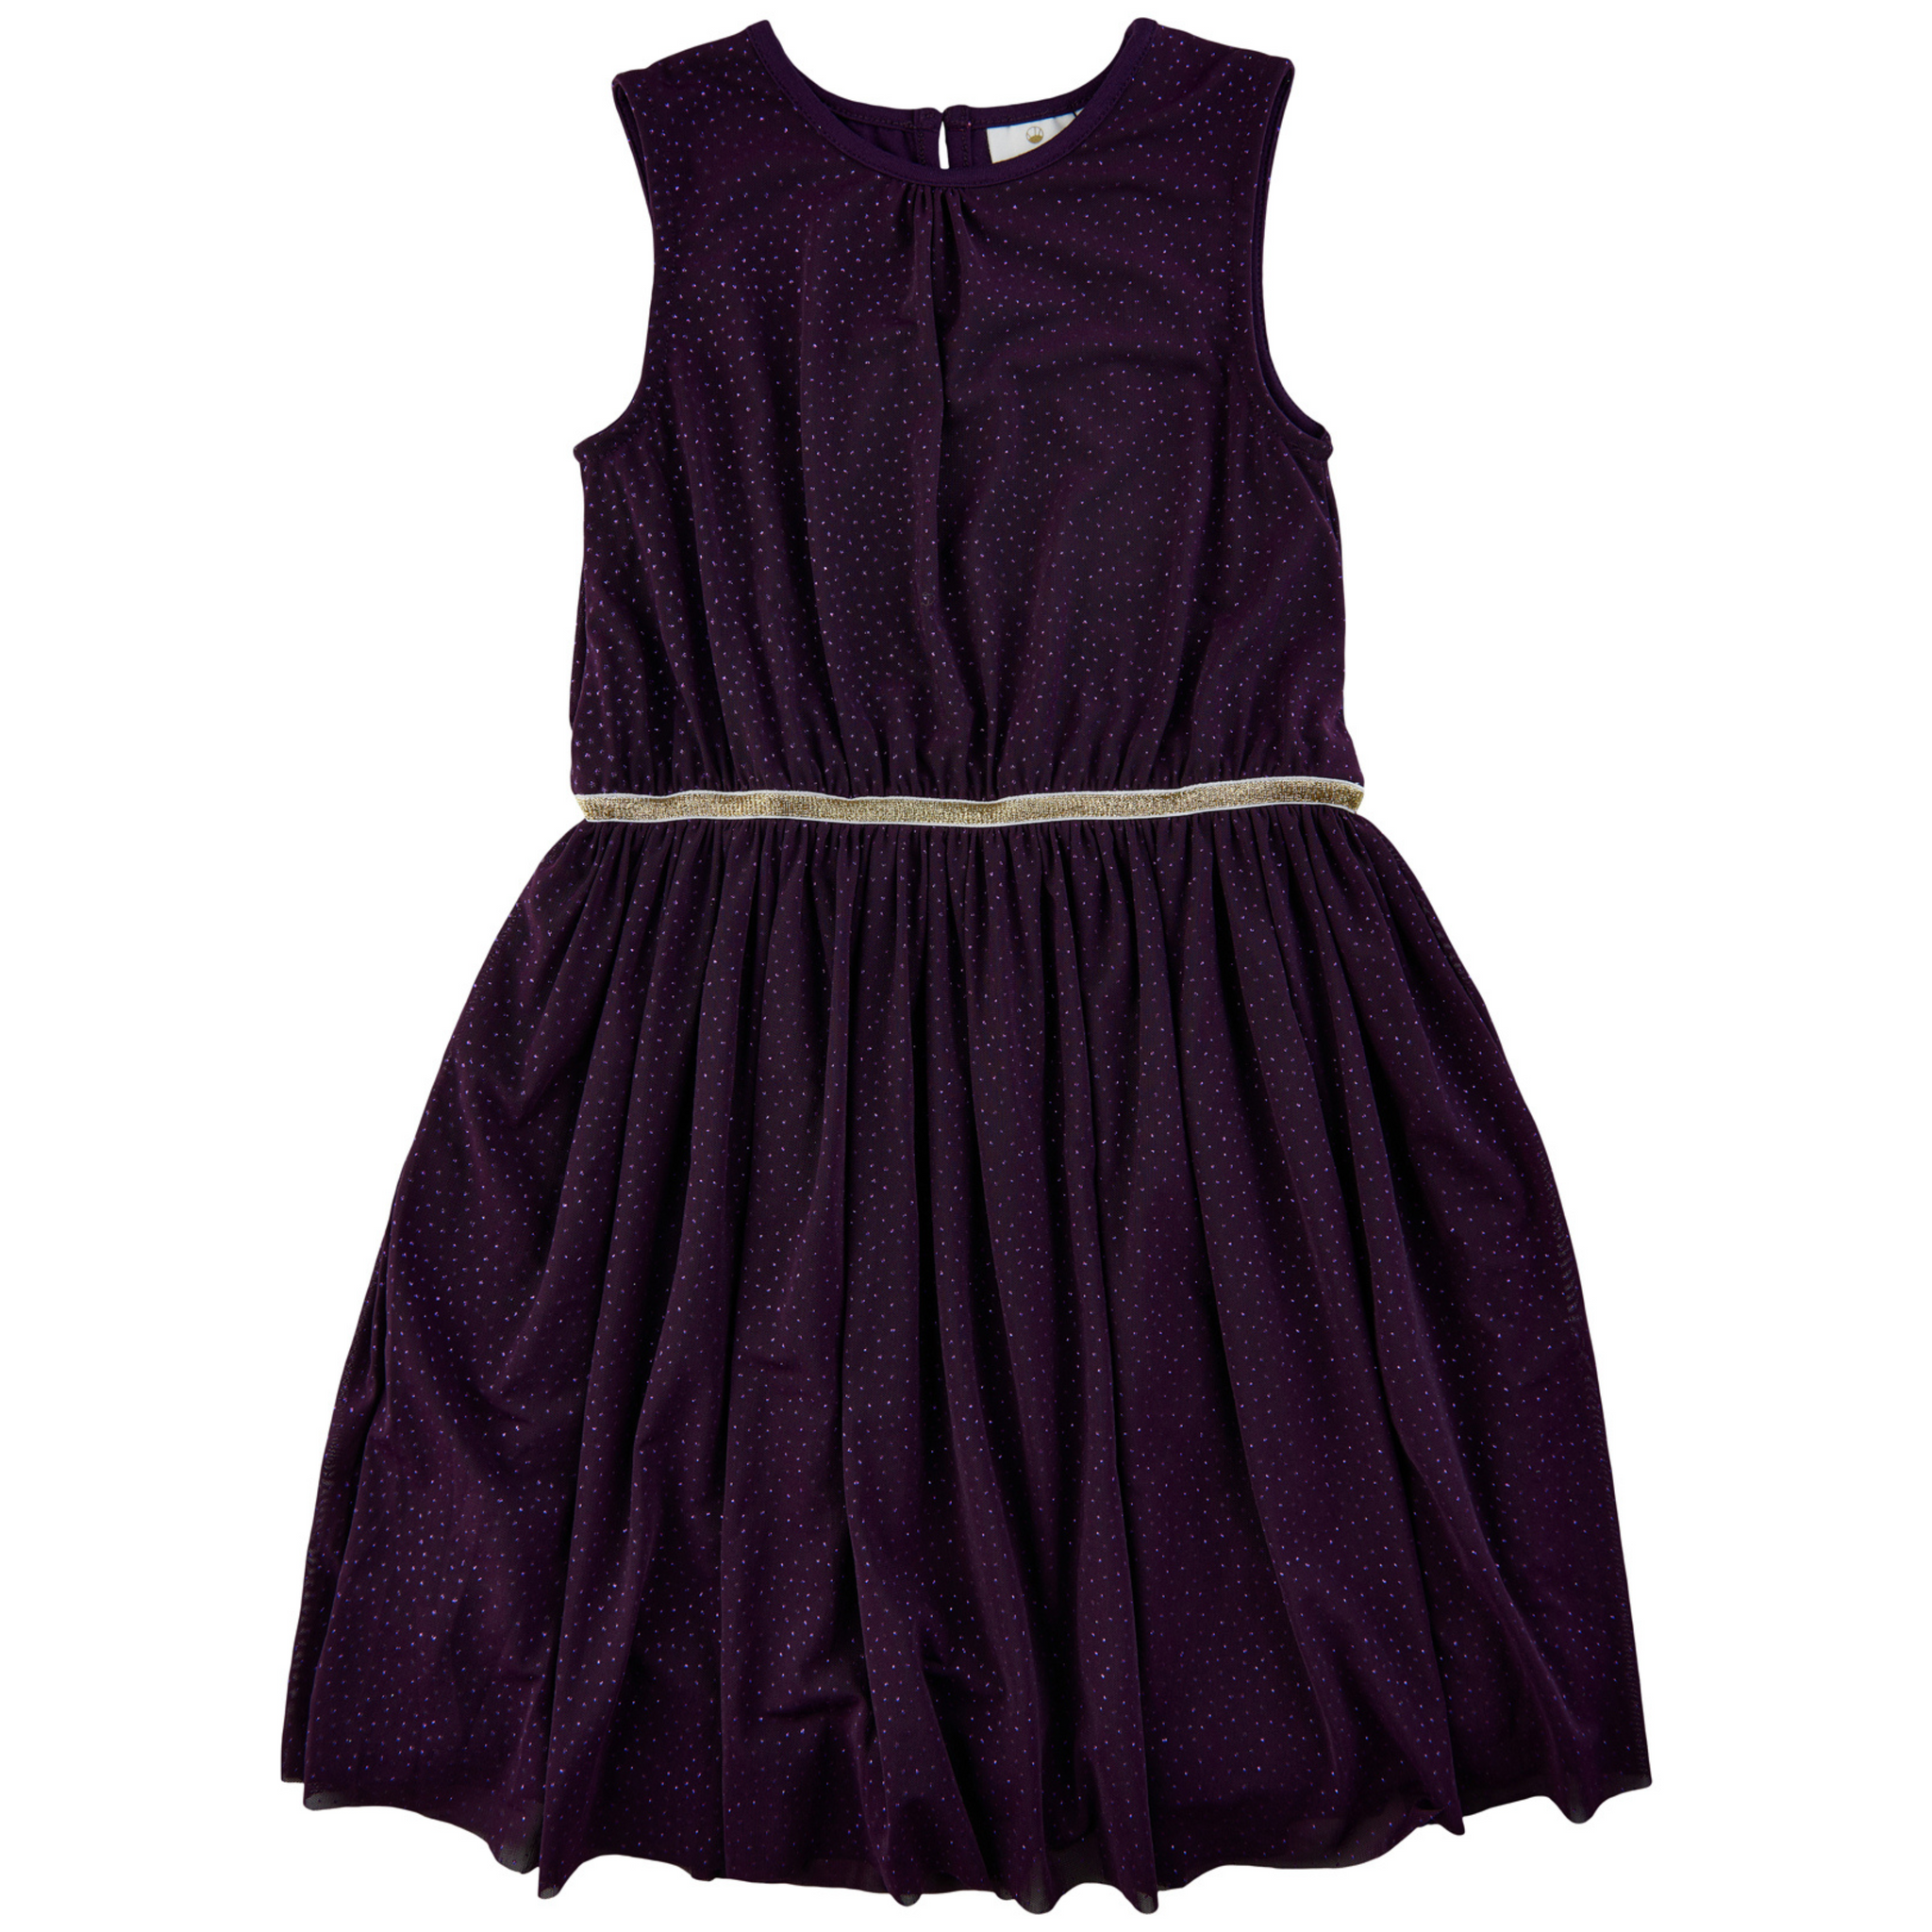 THE NEW - Anna SL Dress (TN4581) - Vintage Violet